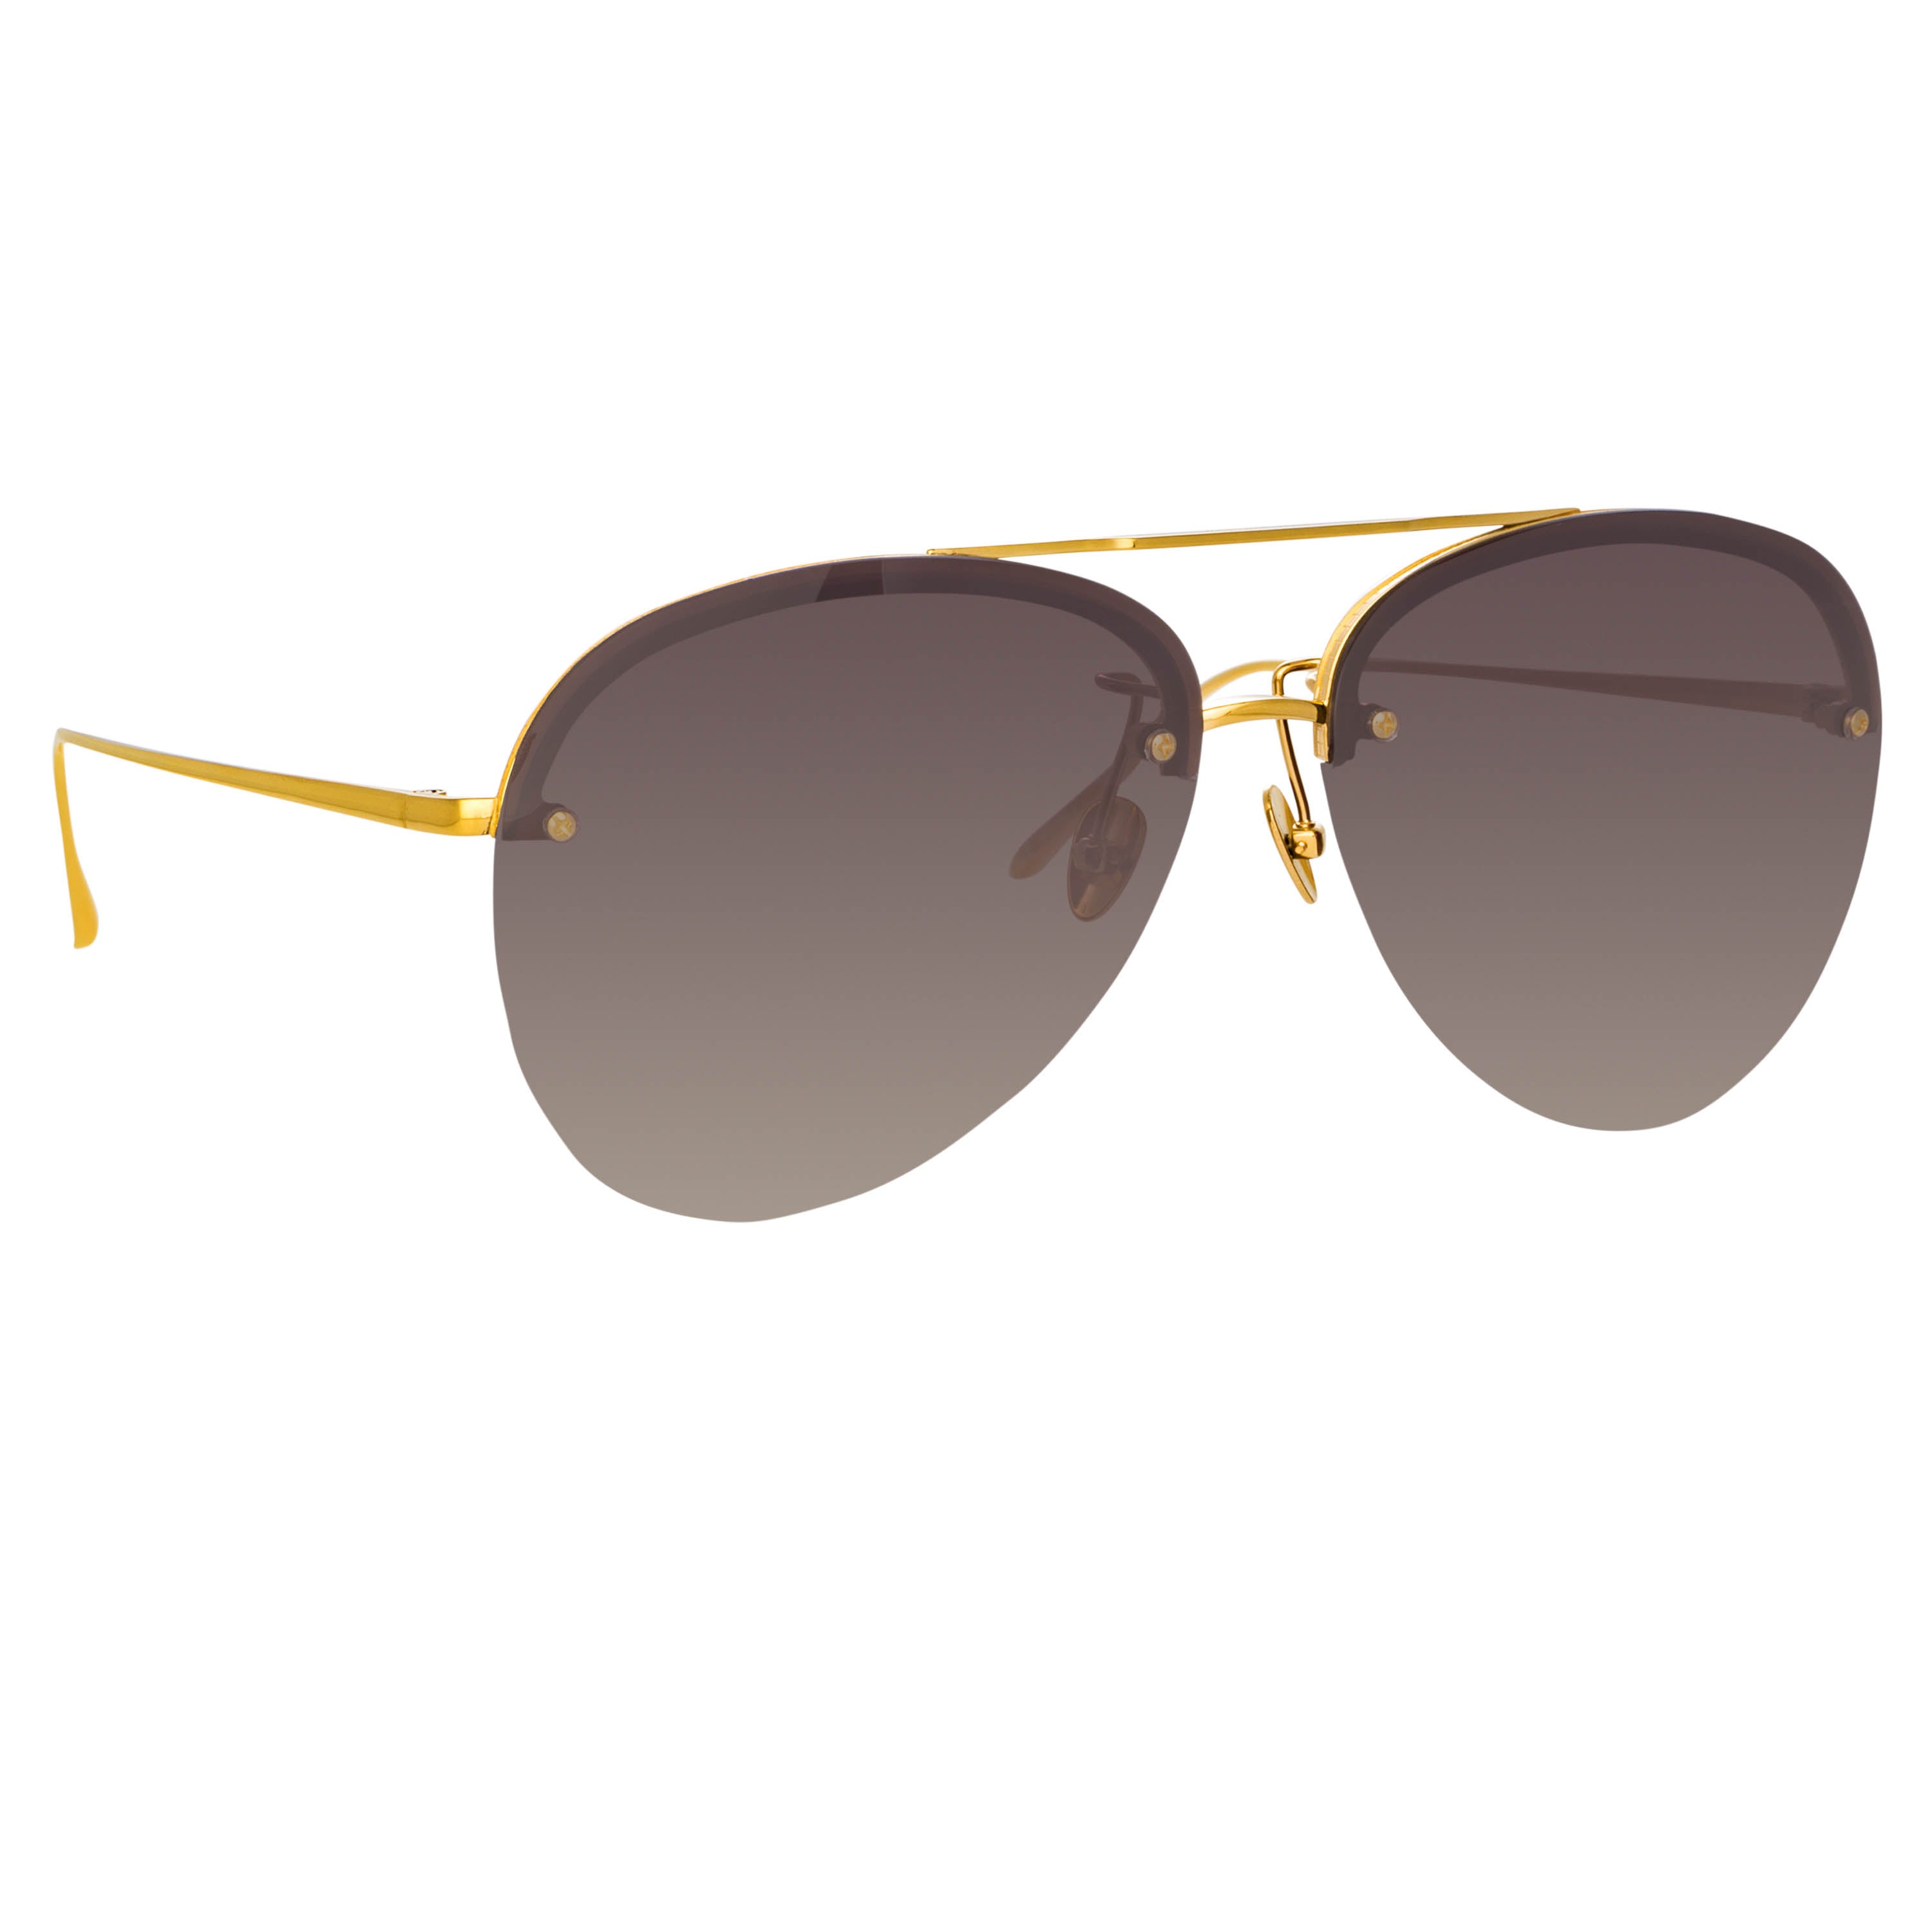 Dee Aviator Sunglasses in Yellow Gold and Grey by LINDA FARROW – LINDA  FARROW (INT'L)